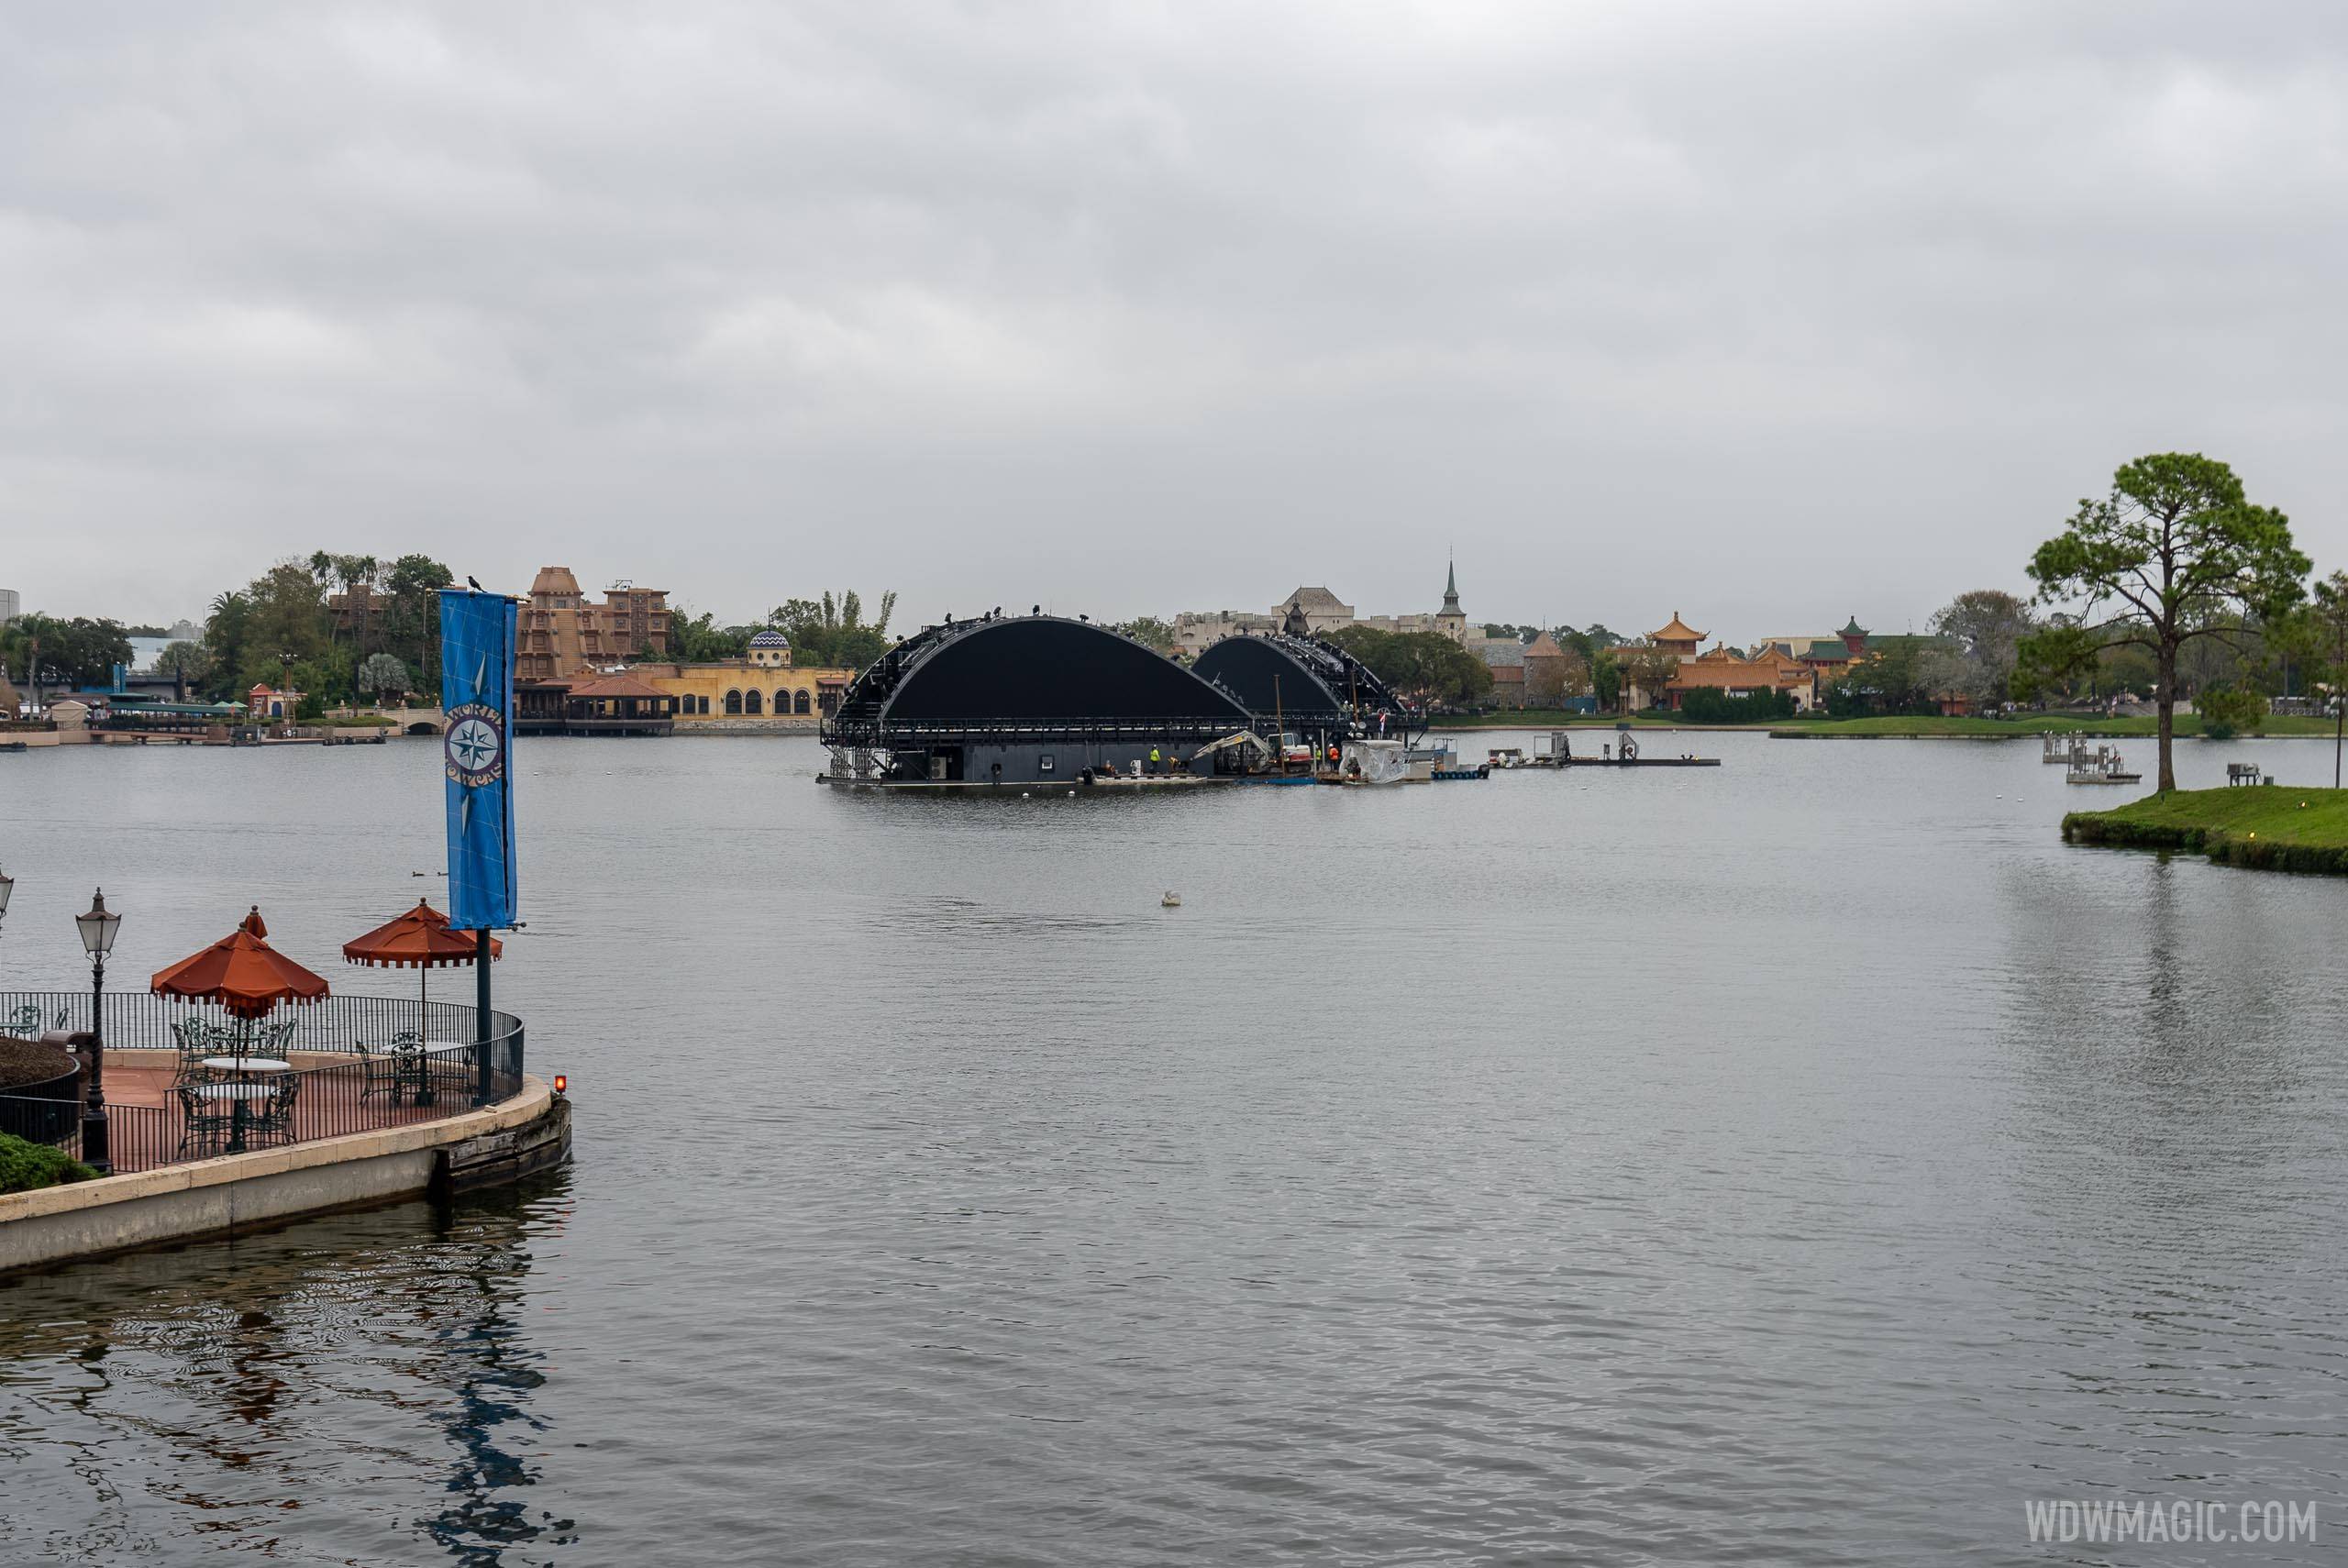 Second Harmonious show barge now in World Showcase Lagoon